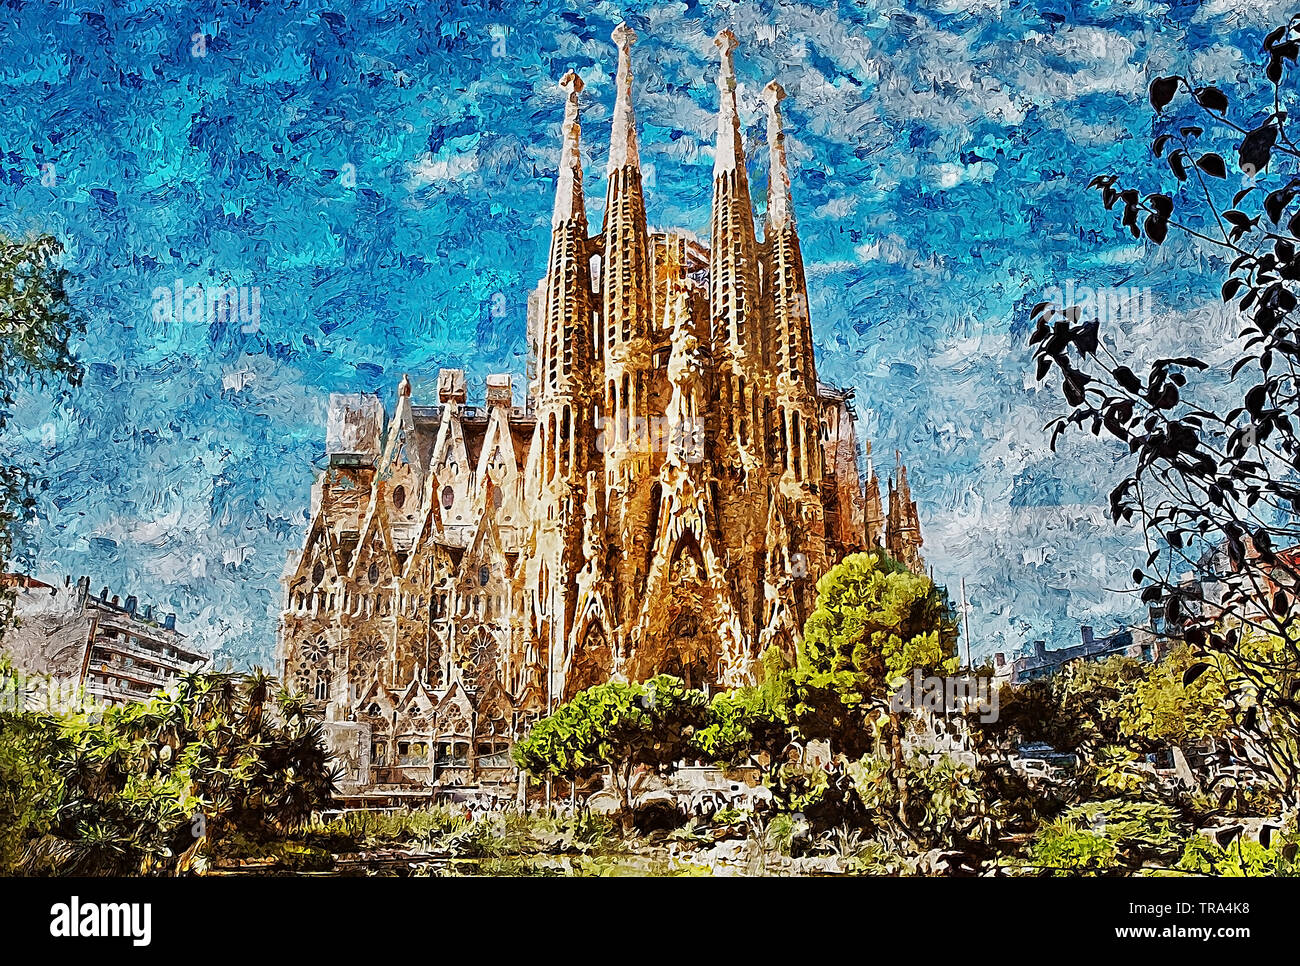 Sagrada Familia, Barcelona. A large Catholic basilica masterpiece of the architect Antoni Gaudí, the leading exponent of Catalan modernism. Stock Photo